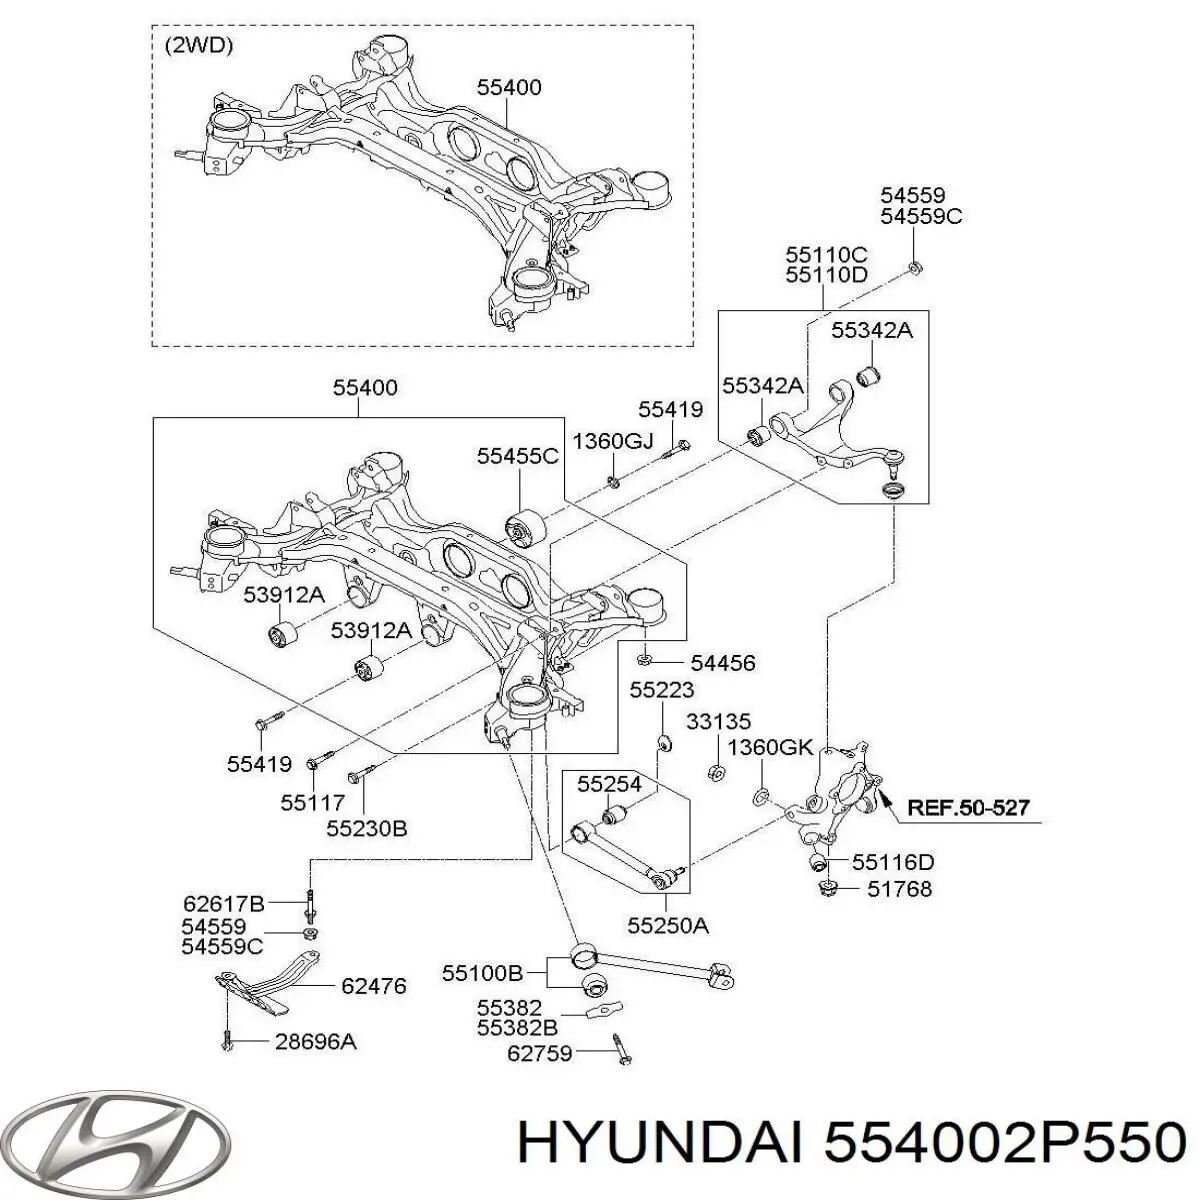 554002P550 Hyundai/Kia балка задней подвески (подрамник)